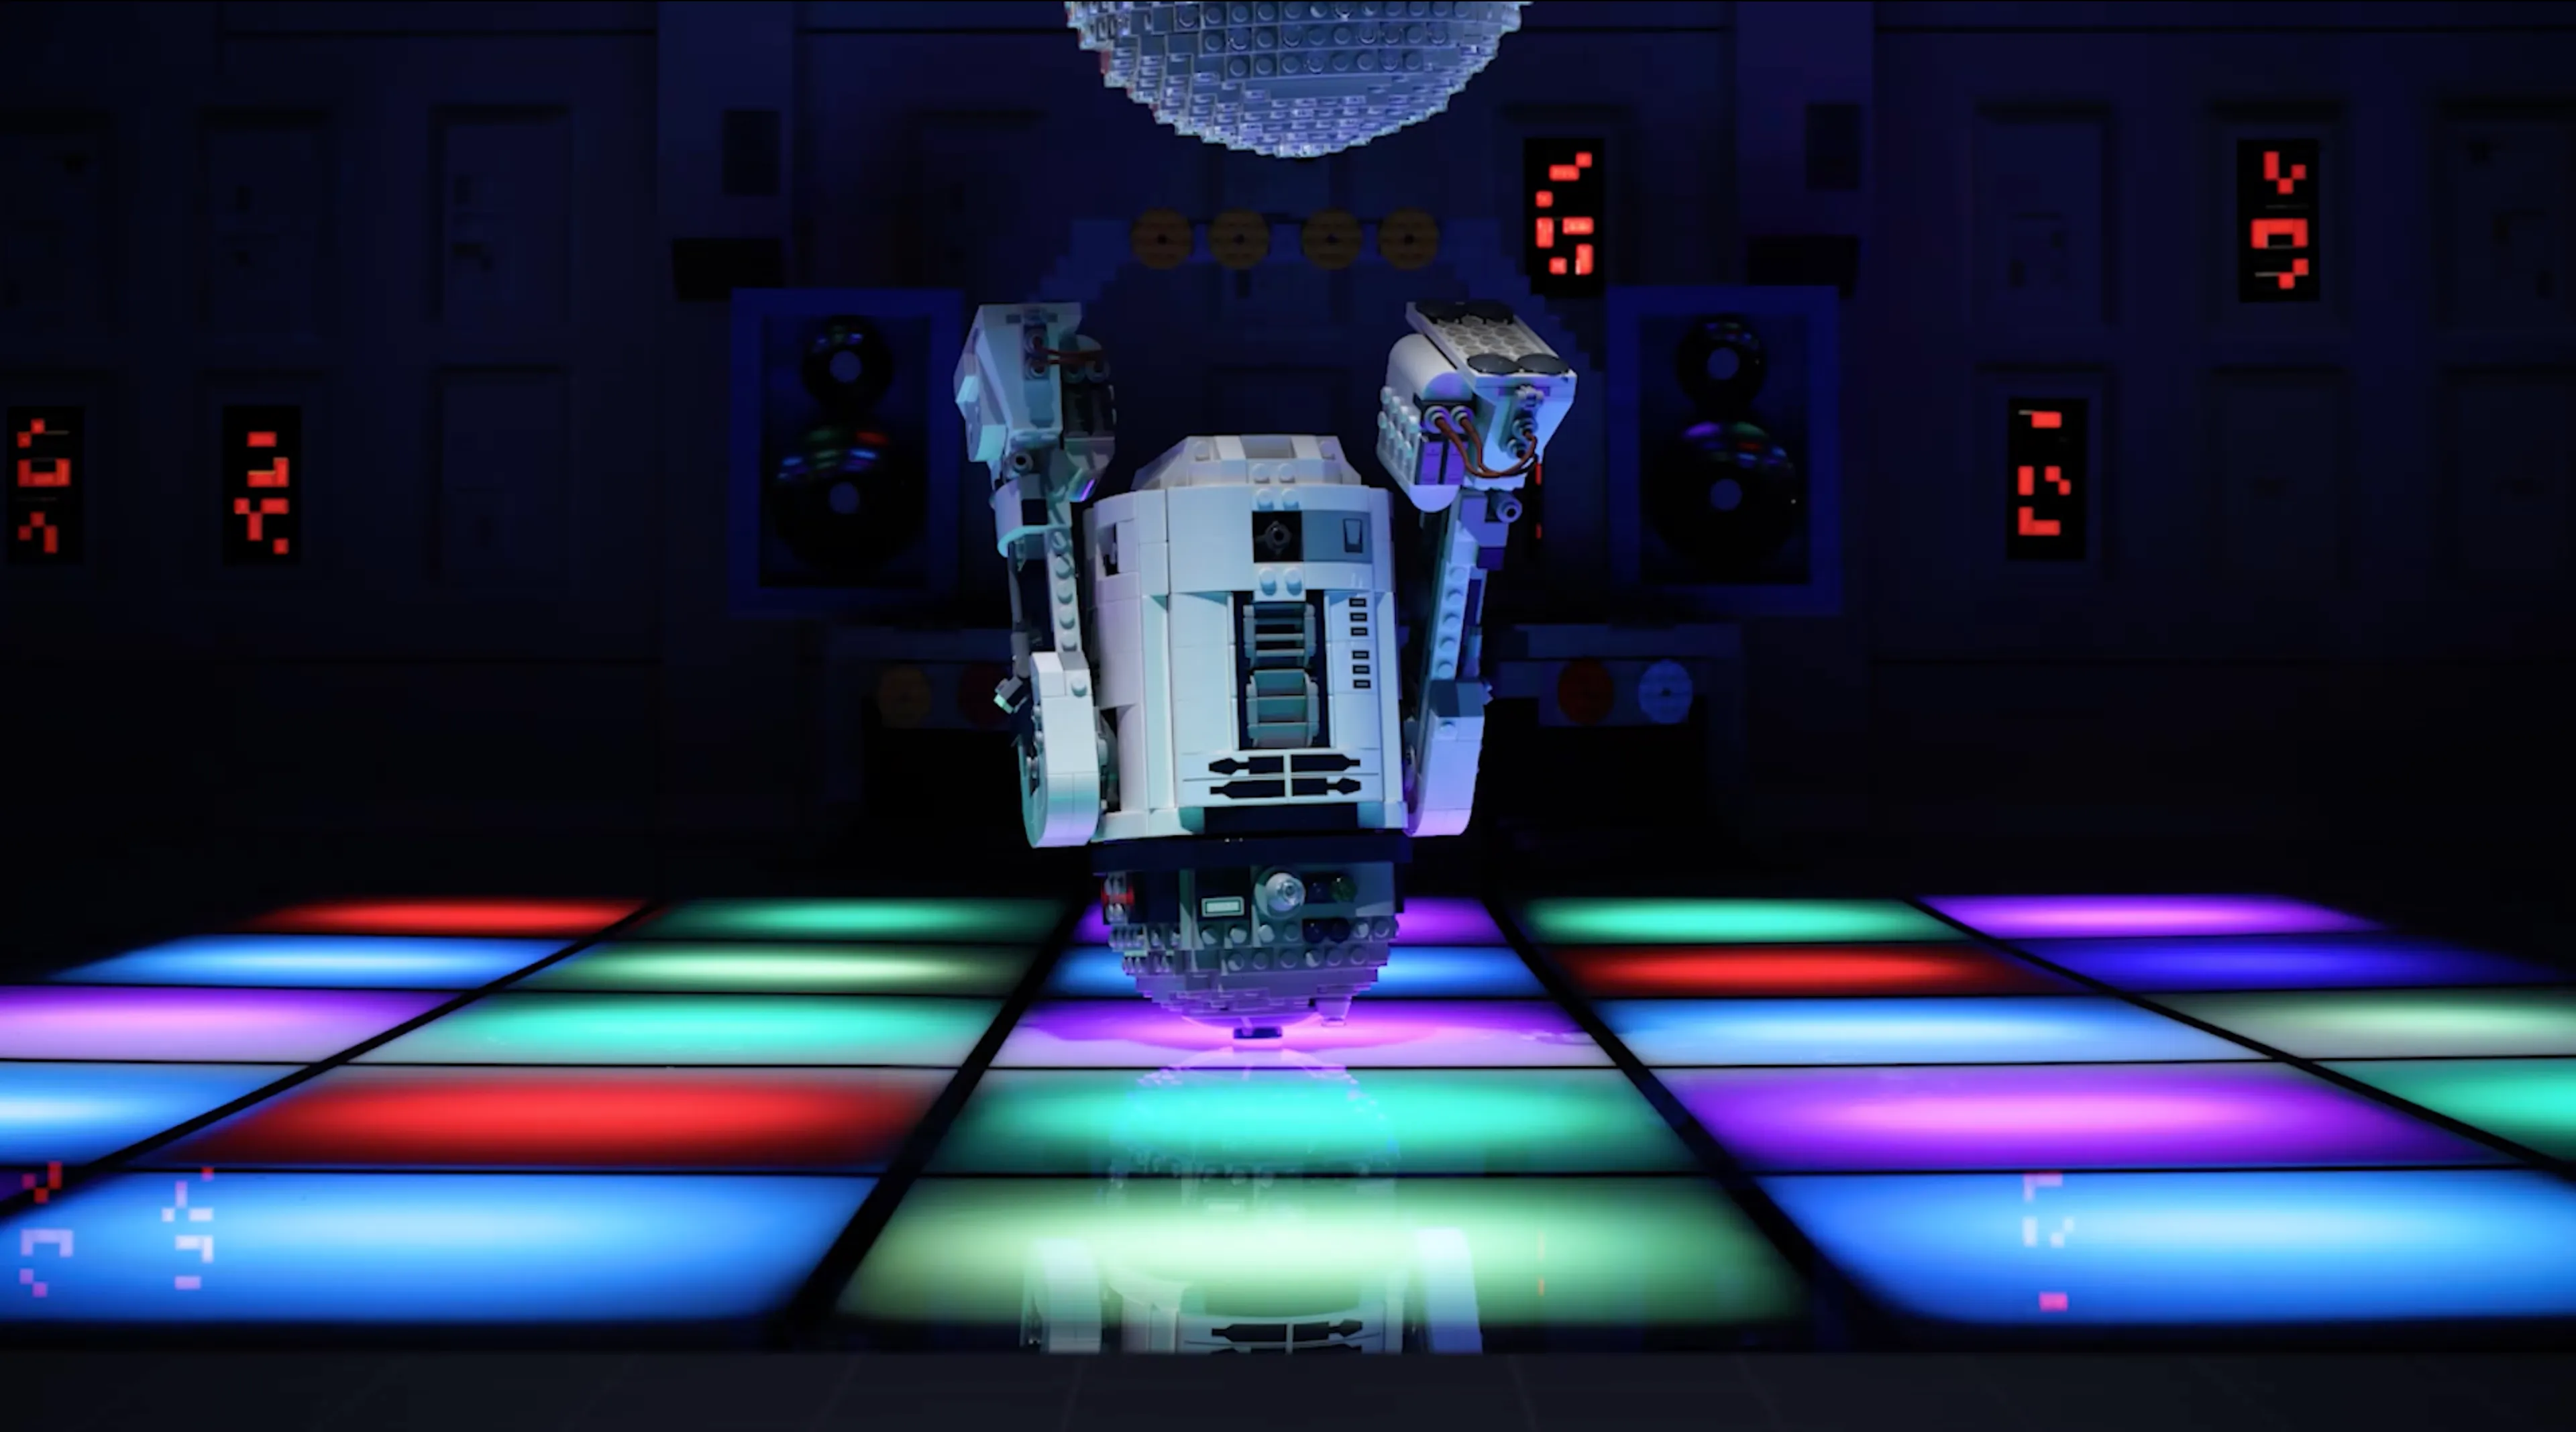 R2-D2 on a dancefloor upside down